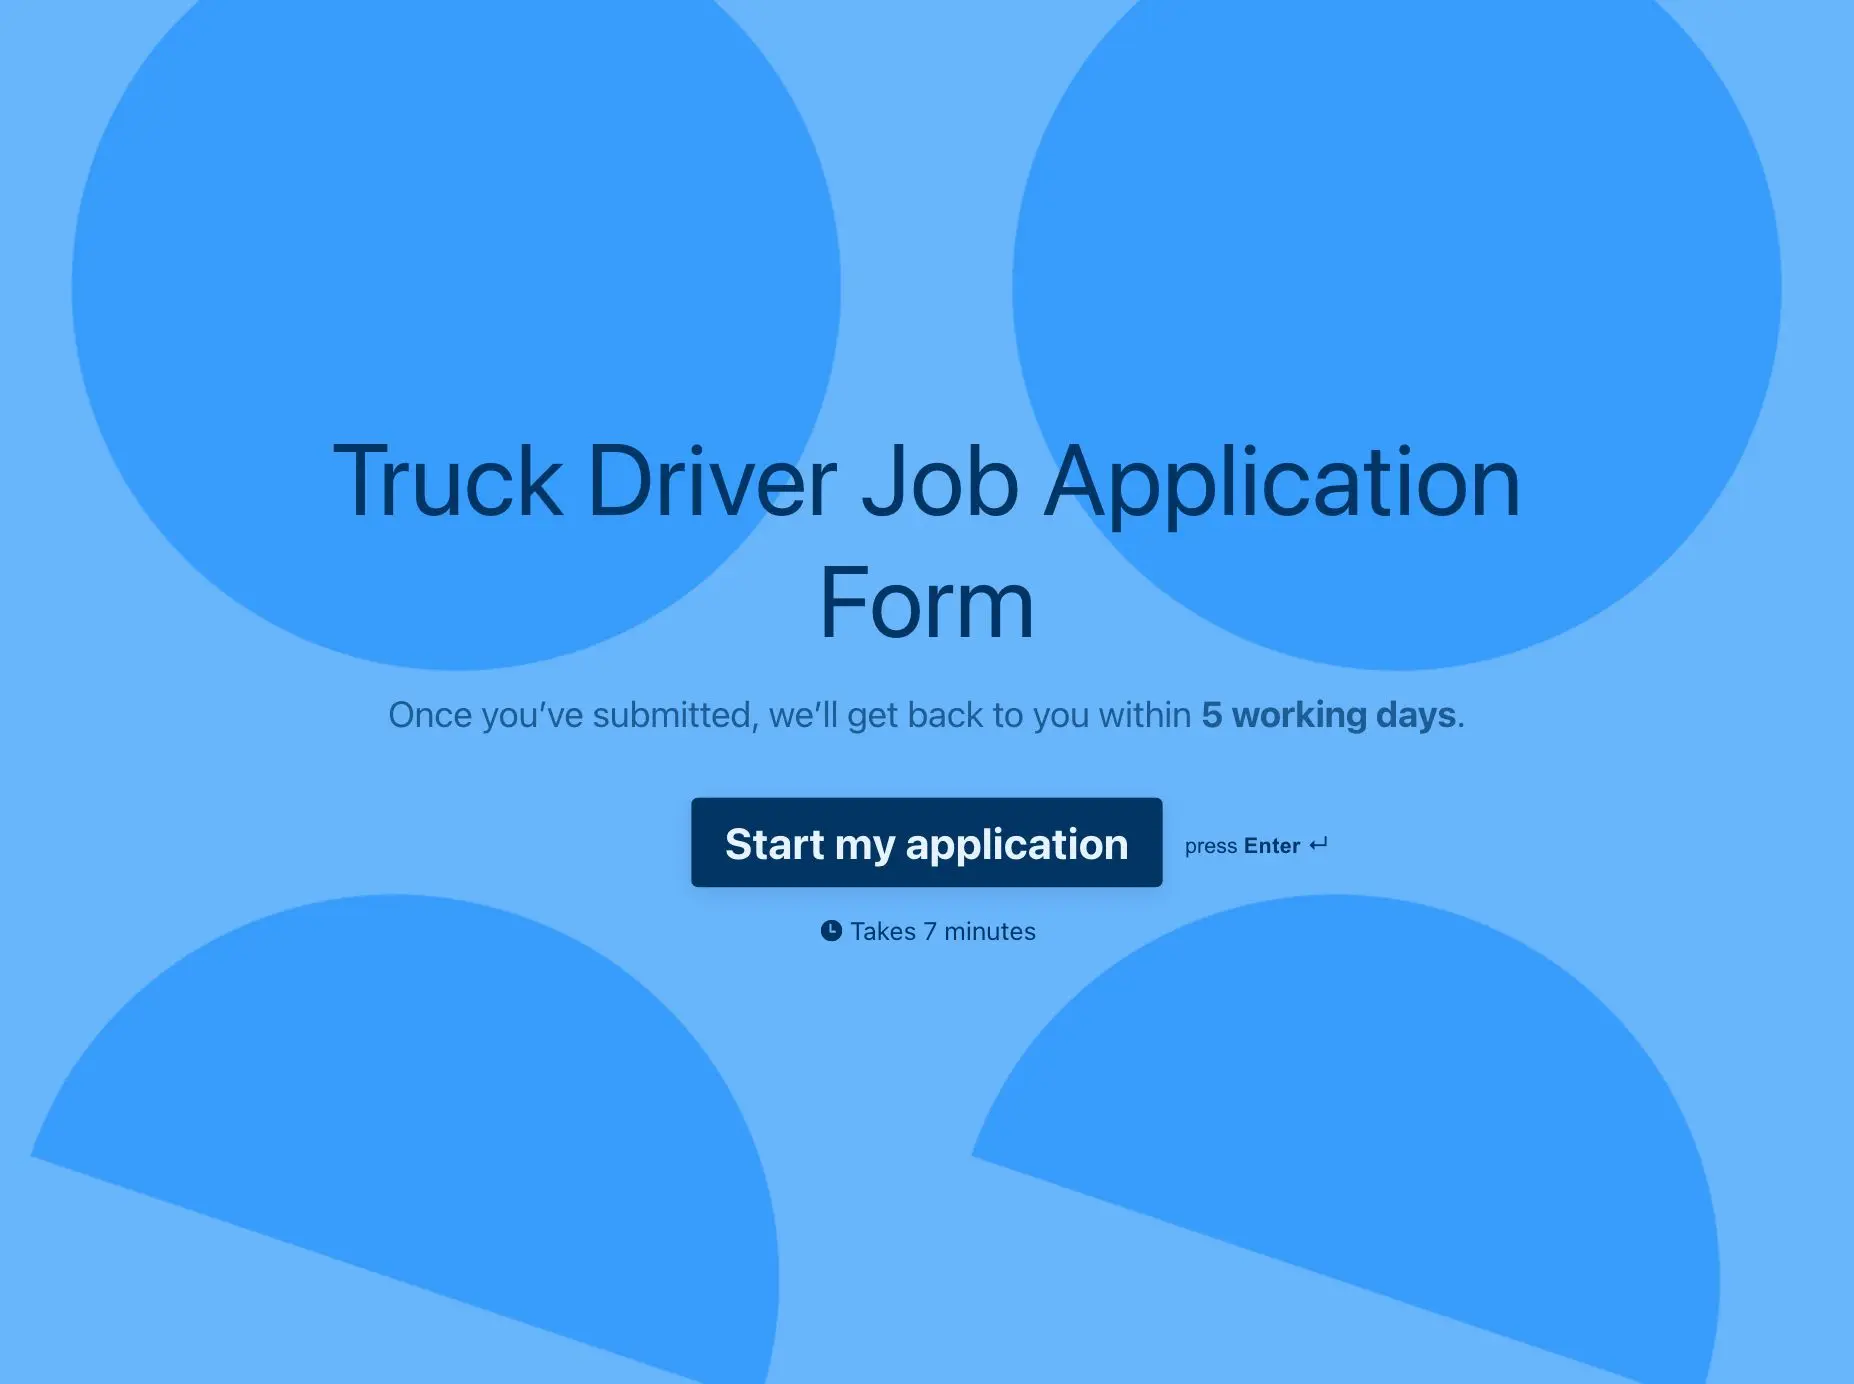 Truck Driver Job Application Form Template Hero